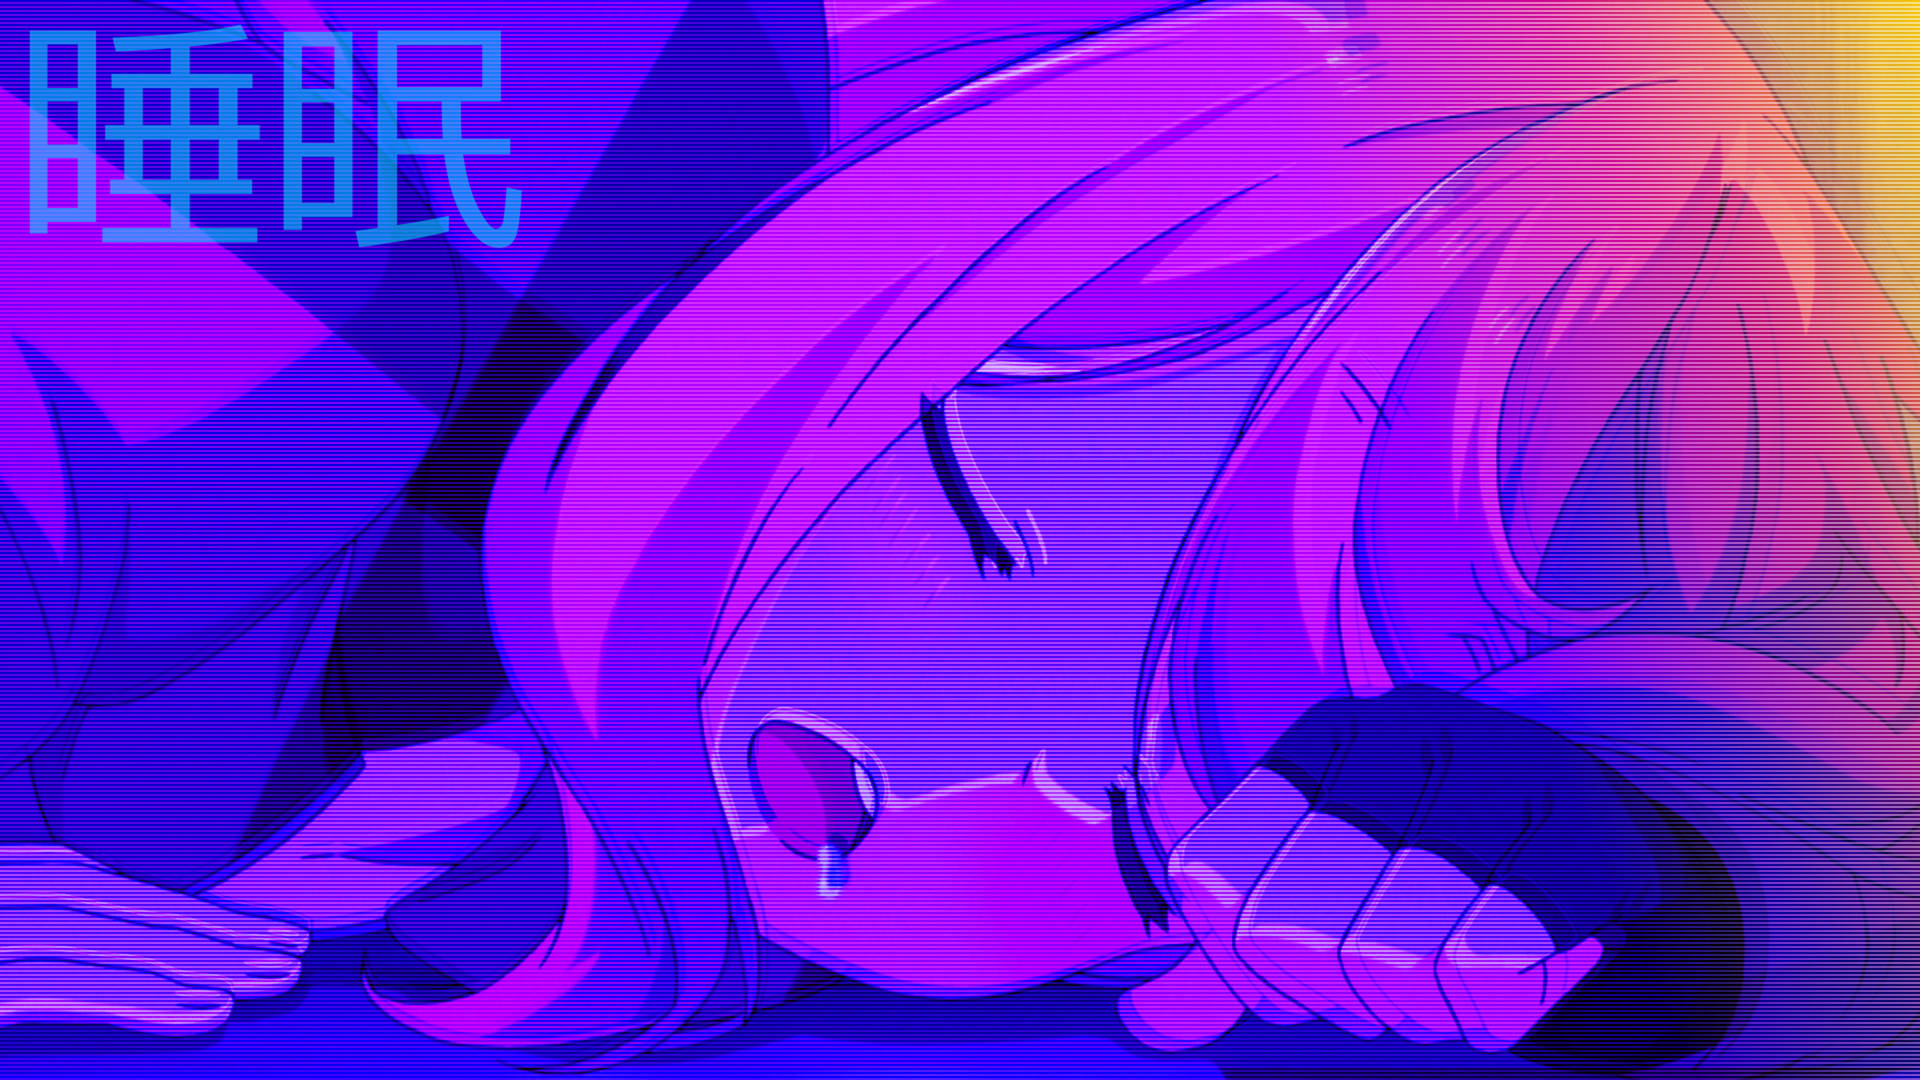 Cute Anime Girl Sleeping with Short Curly Hair · Creative Fabrica